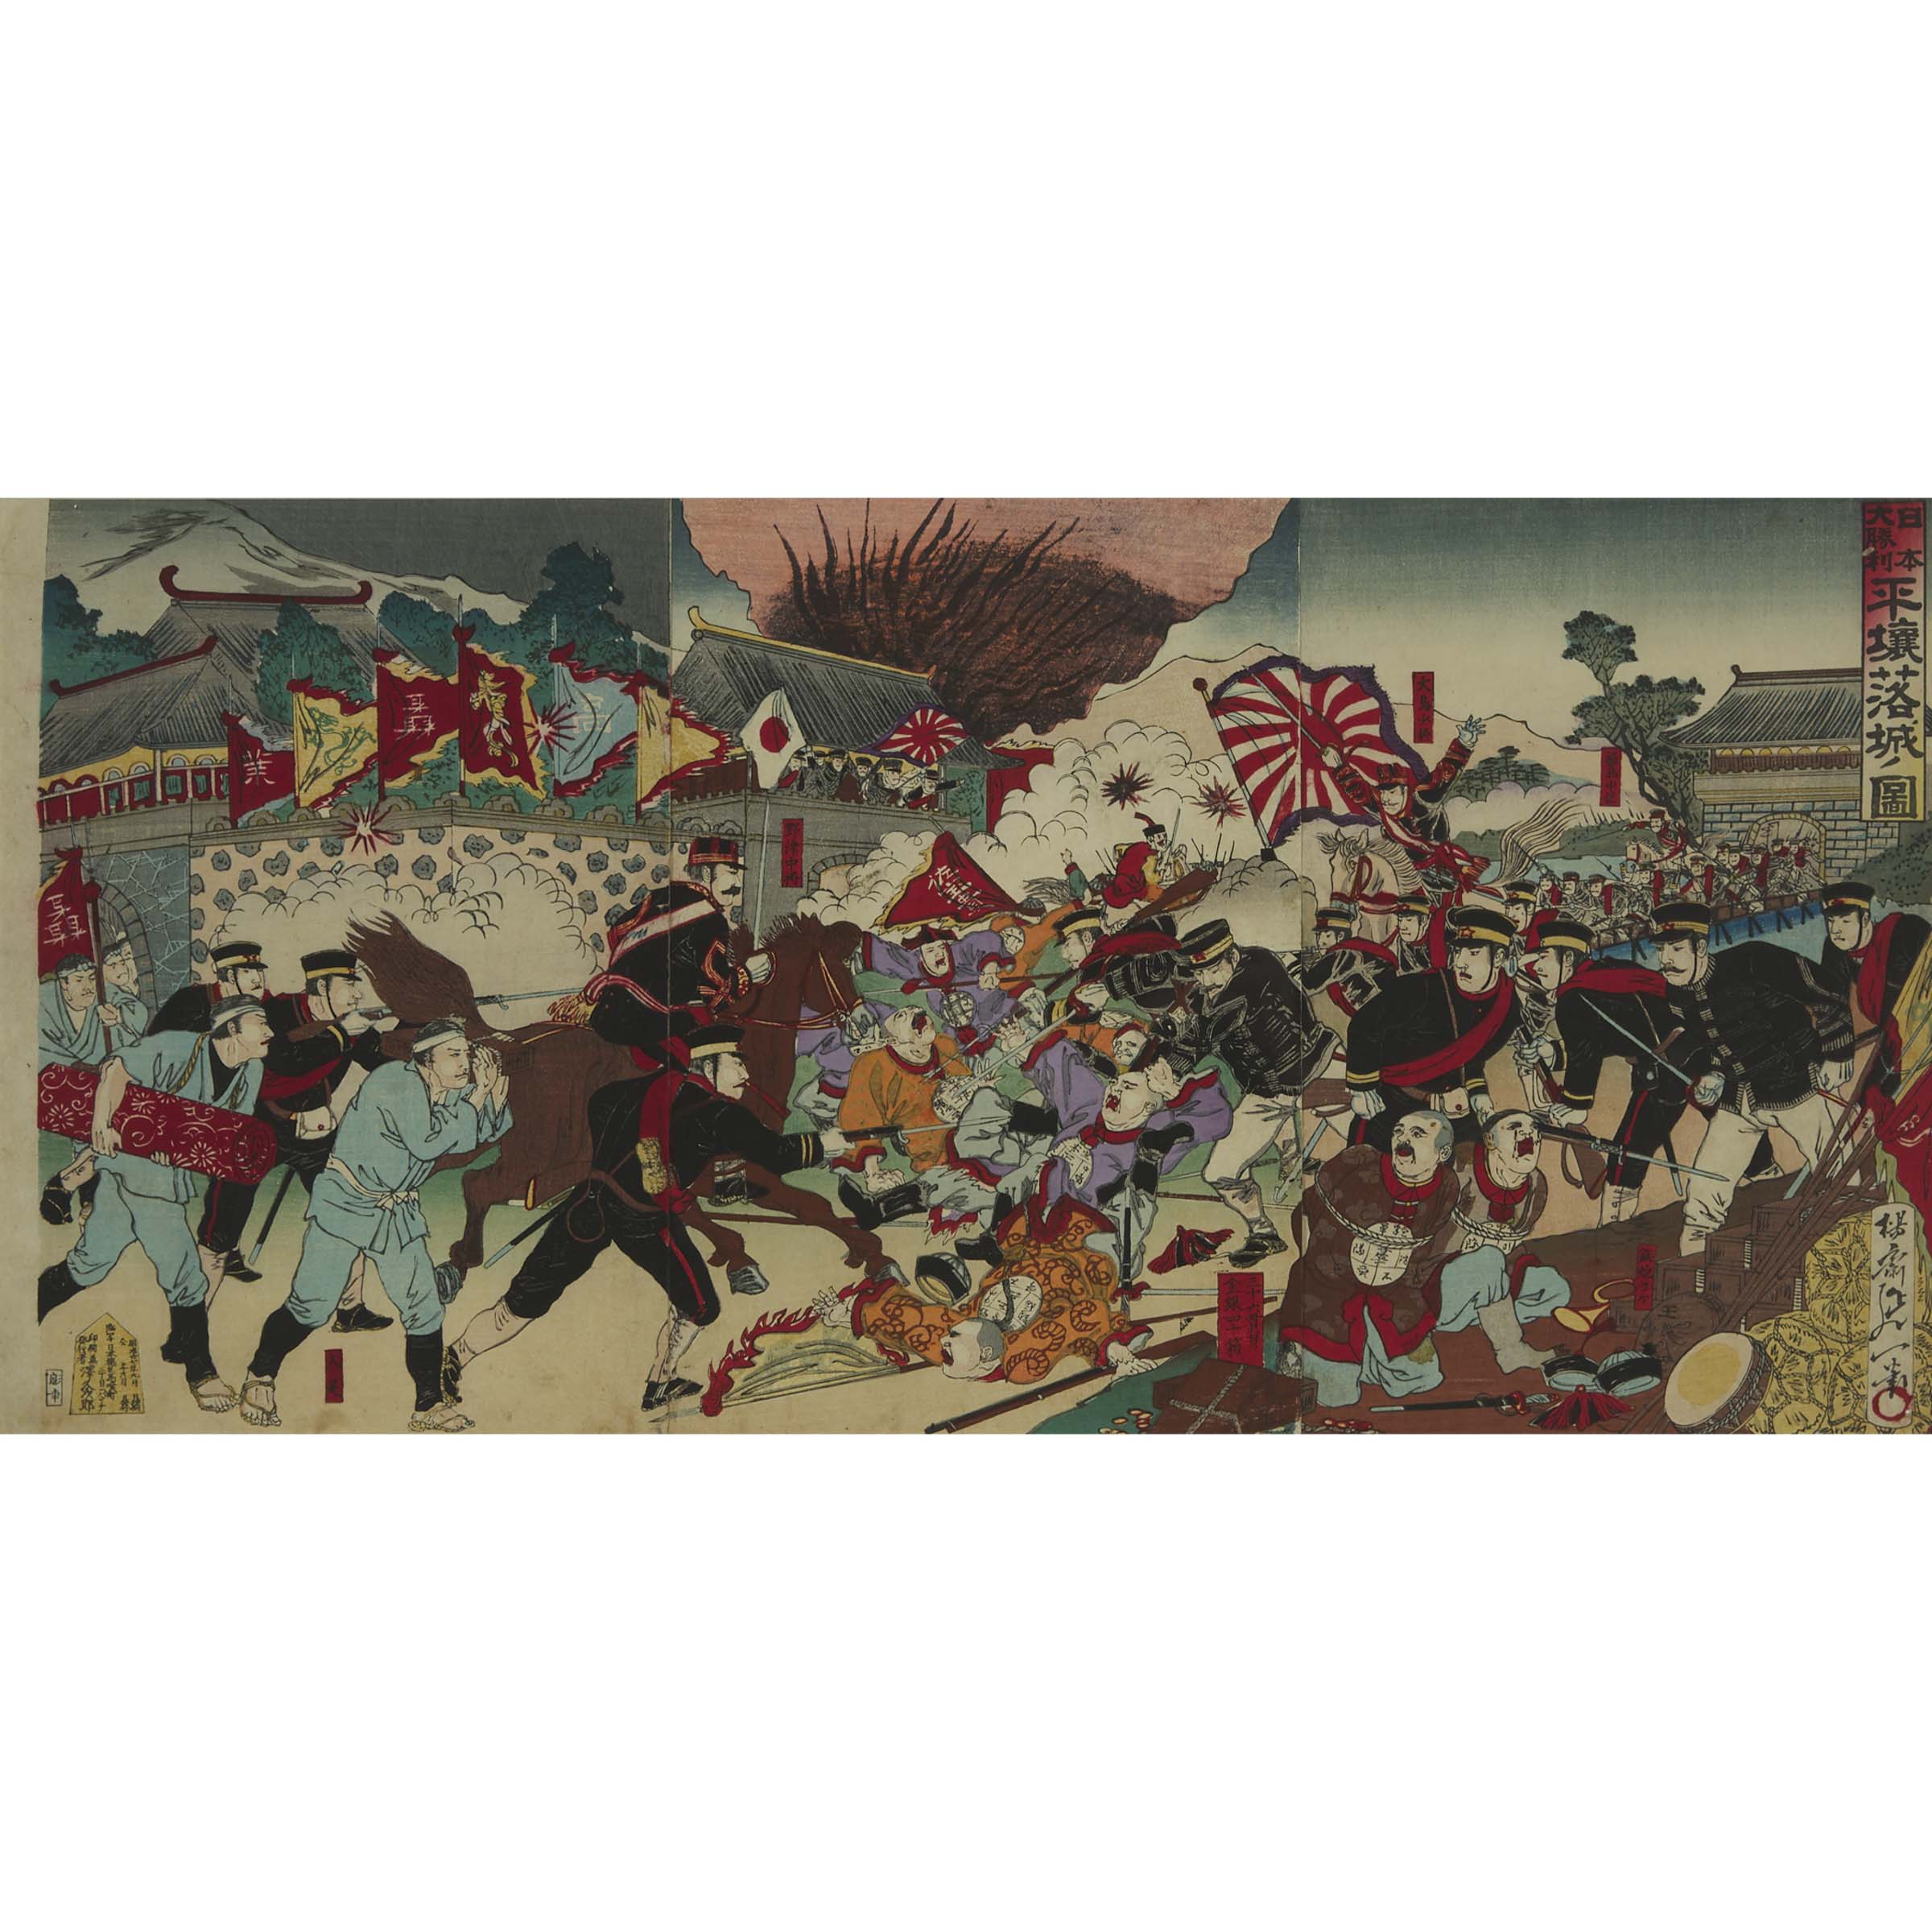 Migata Toshihide (1863-1925), Watanabe Nobukazu (1874-1944), Two Sino-Japanese War Triptychs, Meiji Period